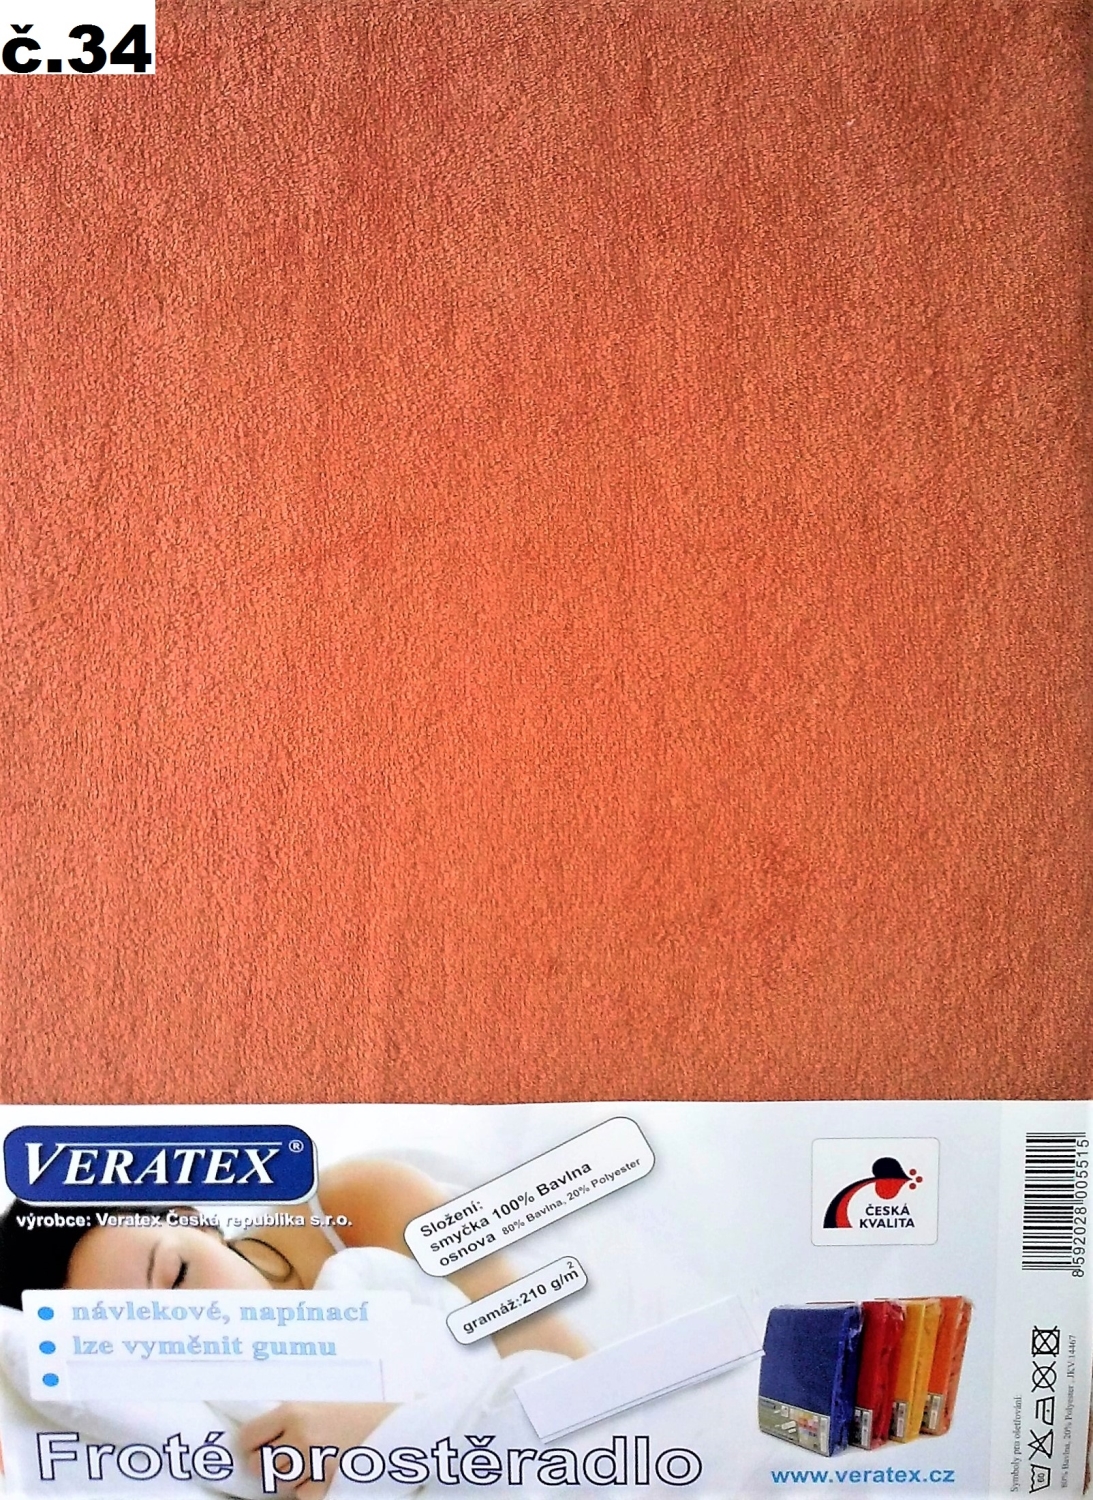 Veratex Froté prostěradlo 160x200/16 cm (č.34-sv.rezavá) 160 x 200 cm